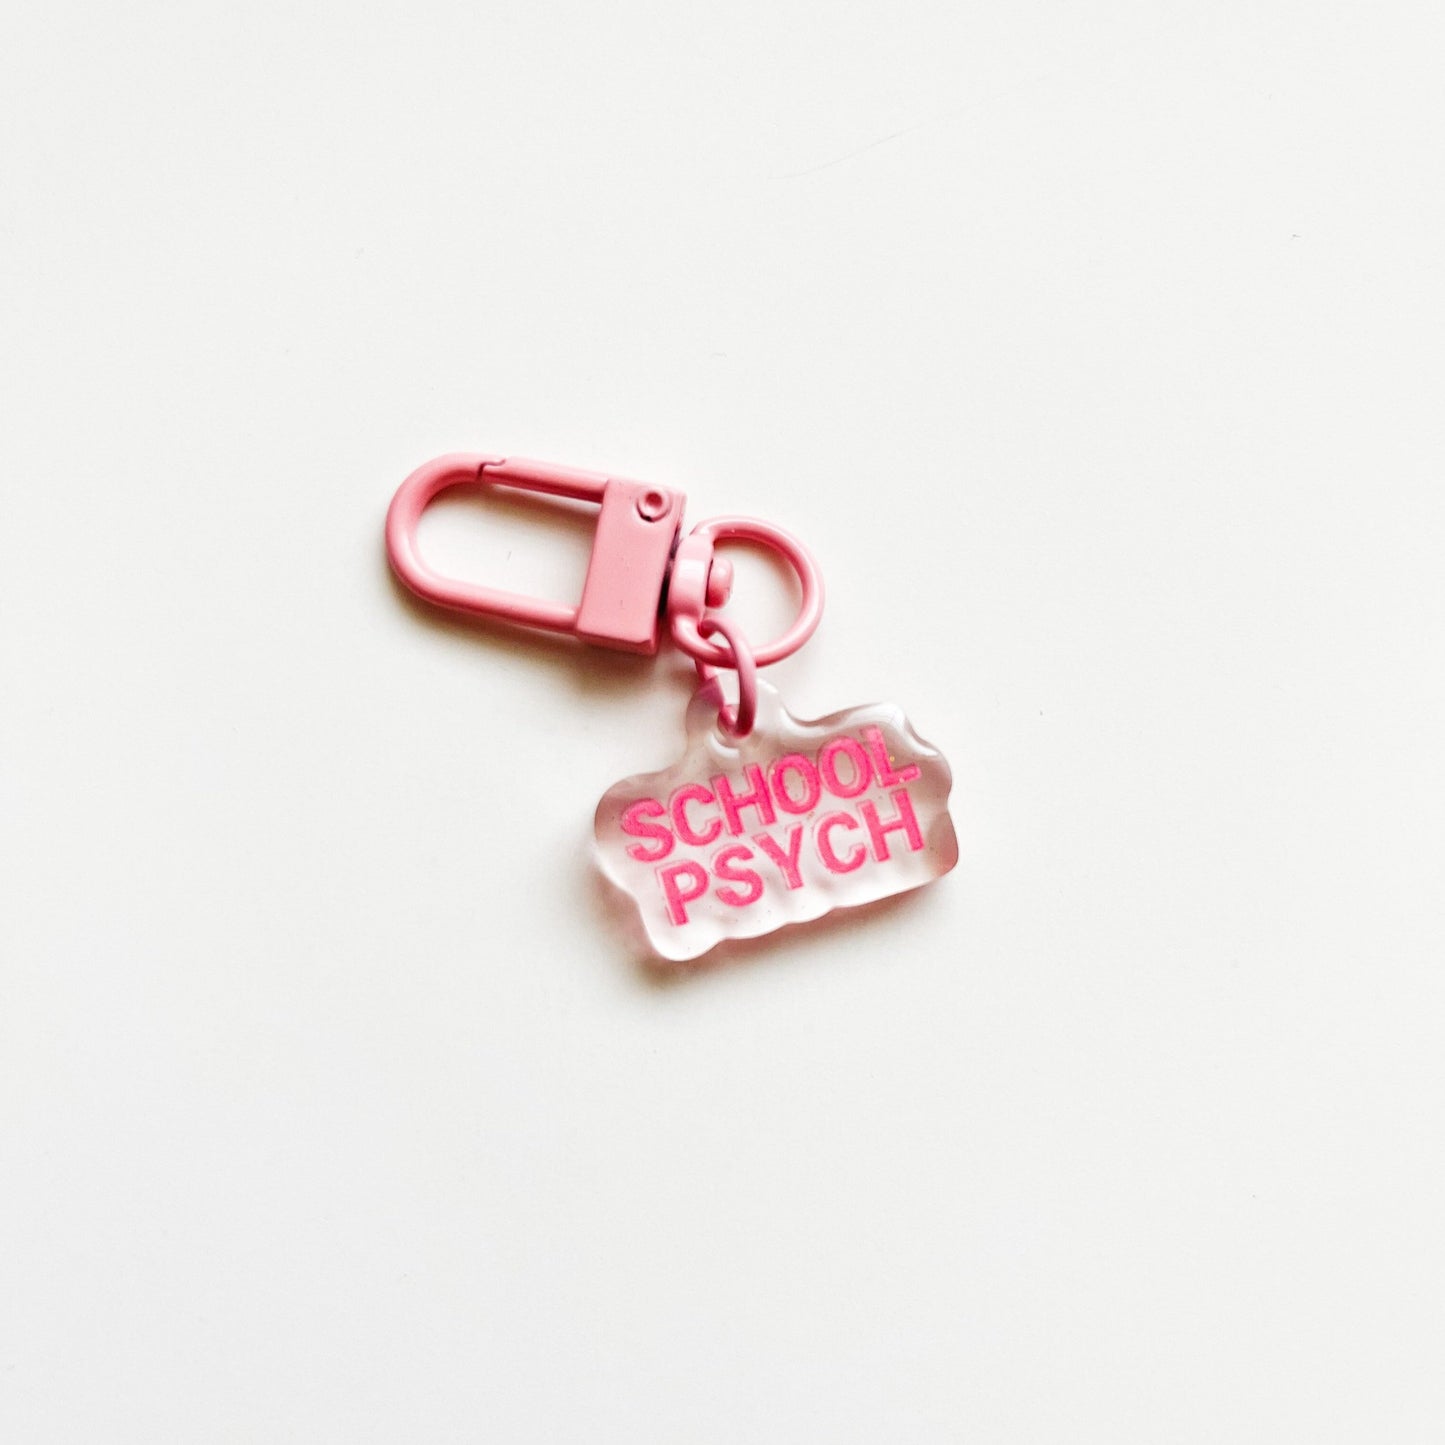 School Psych Badge Charm